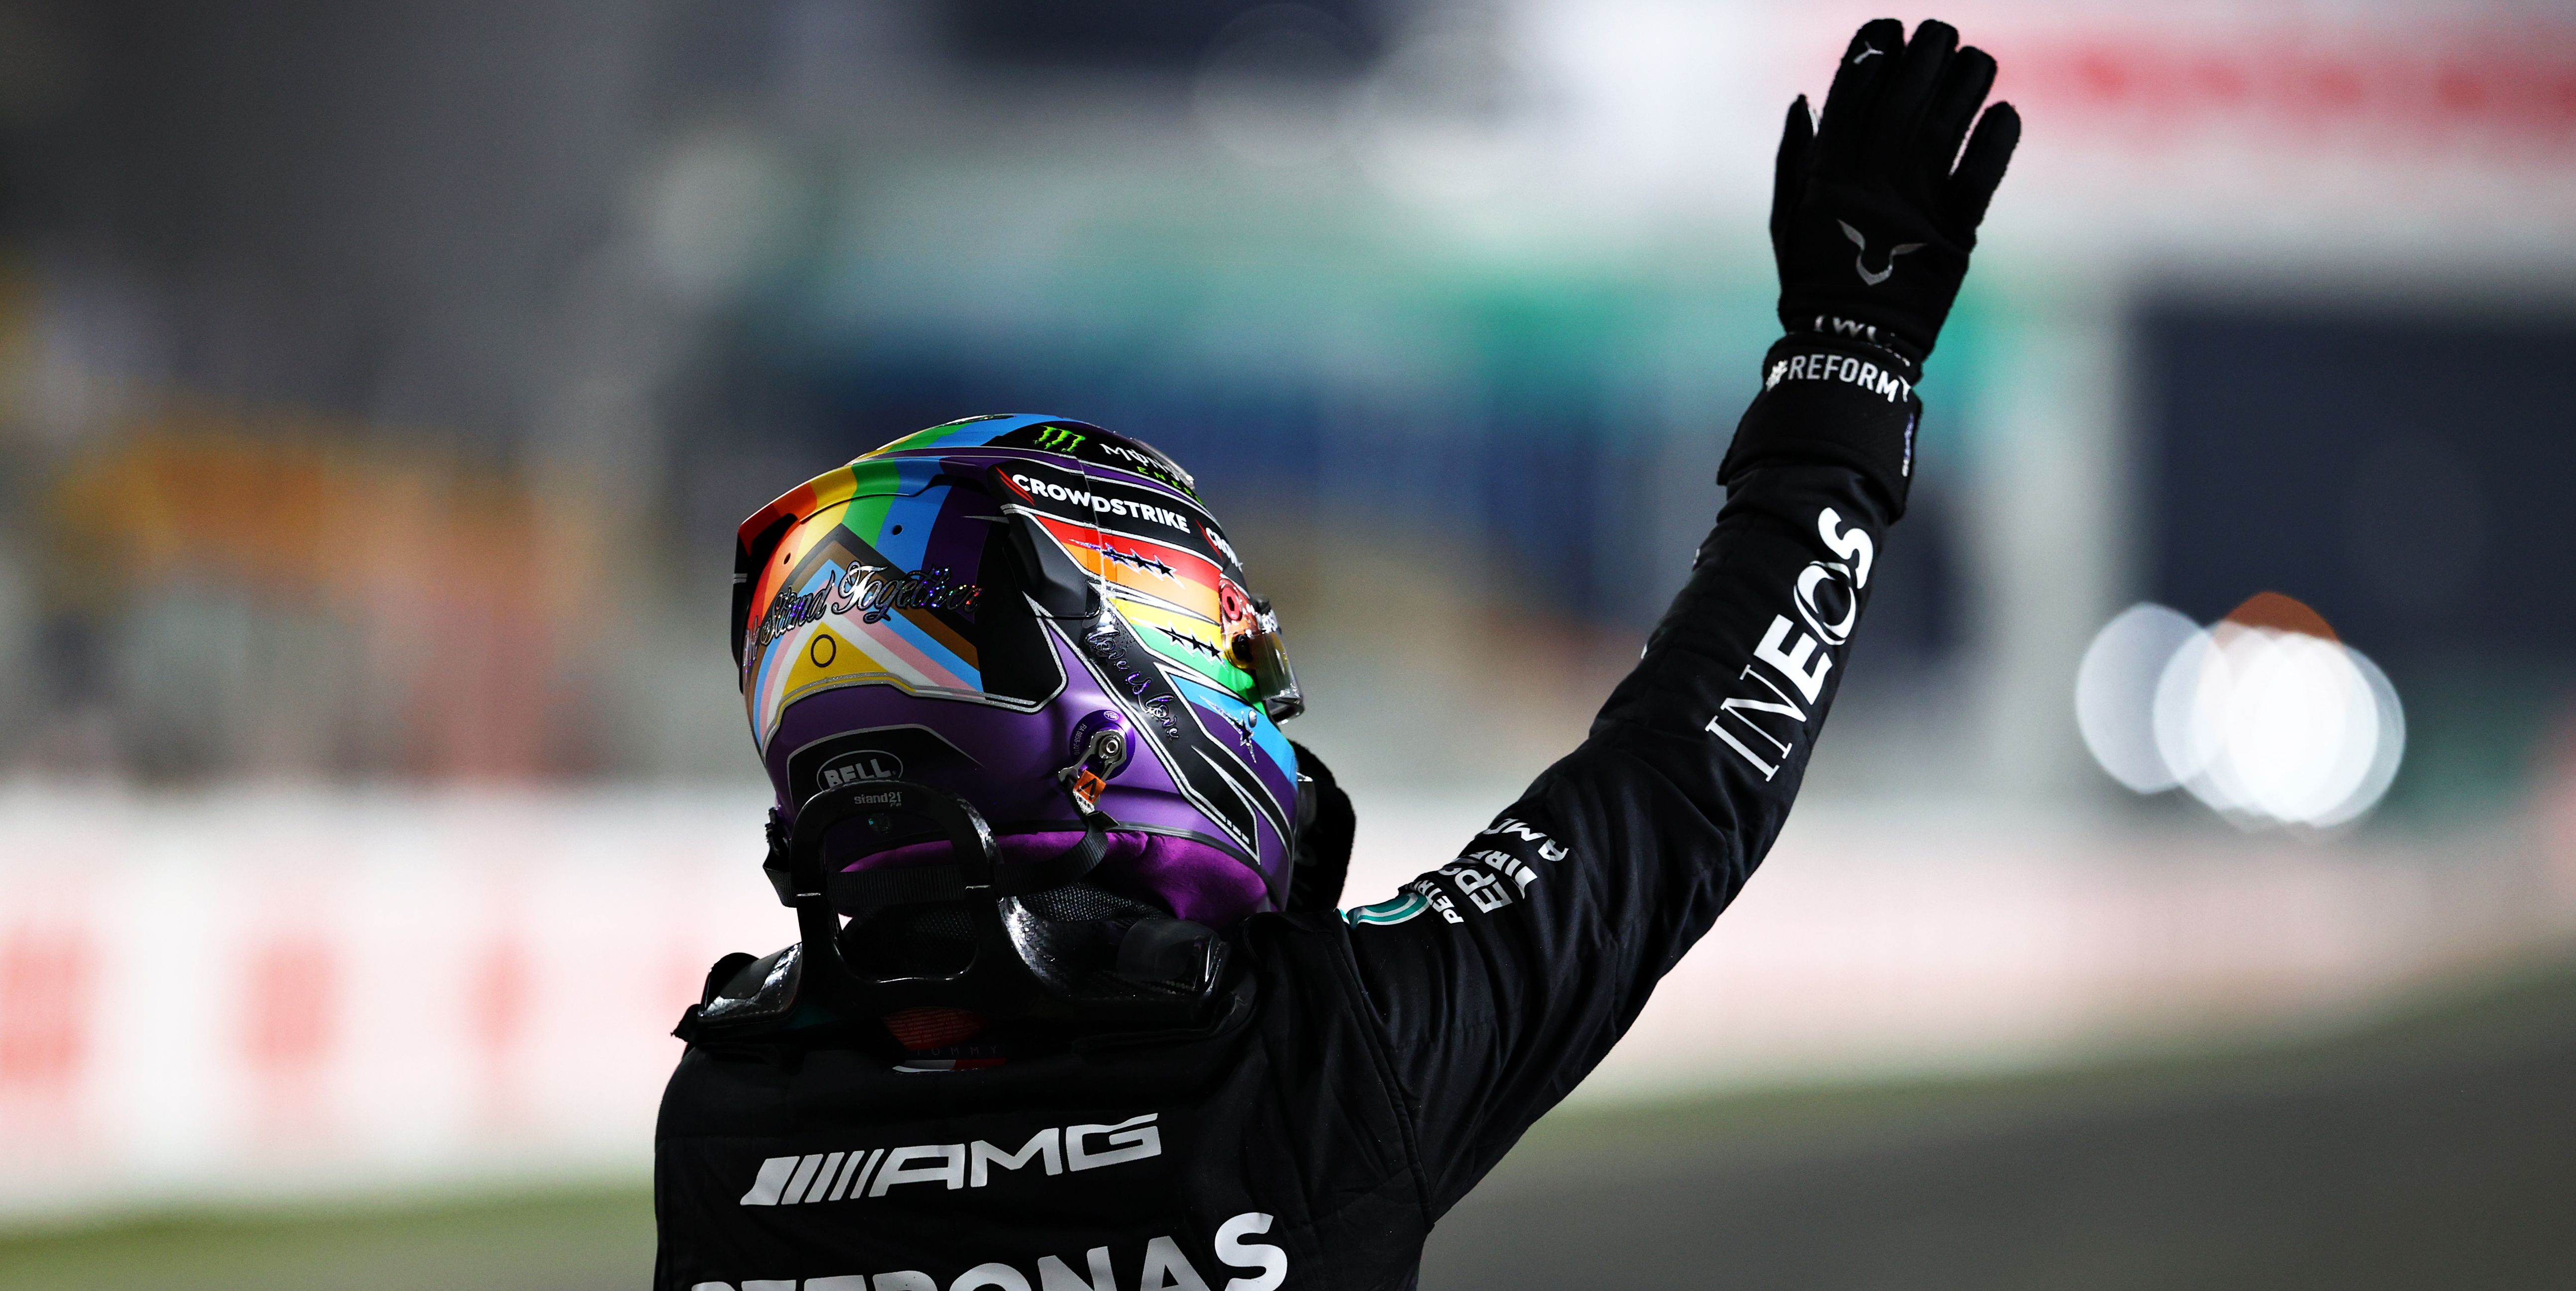 Lewis Hamilton Will Wear Rainbow Helmet in Miami, Protesting Florida's Anti-LGBTQ Laws